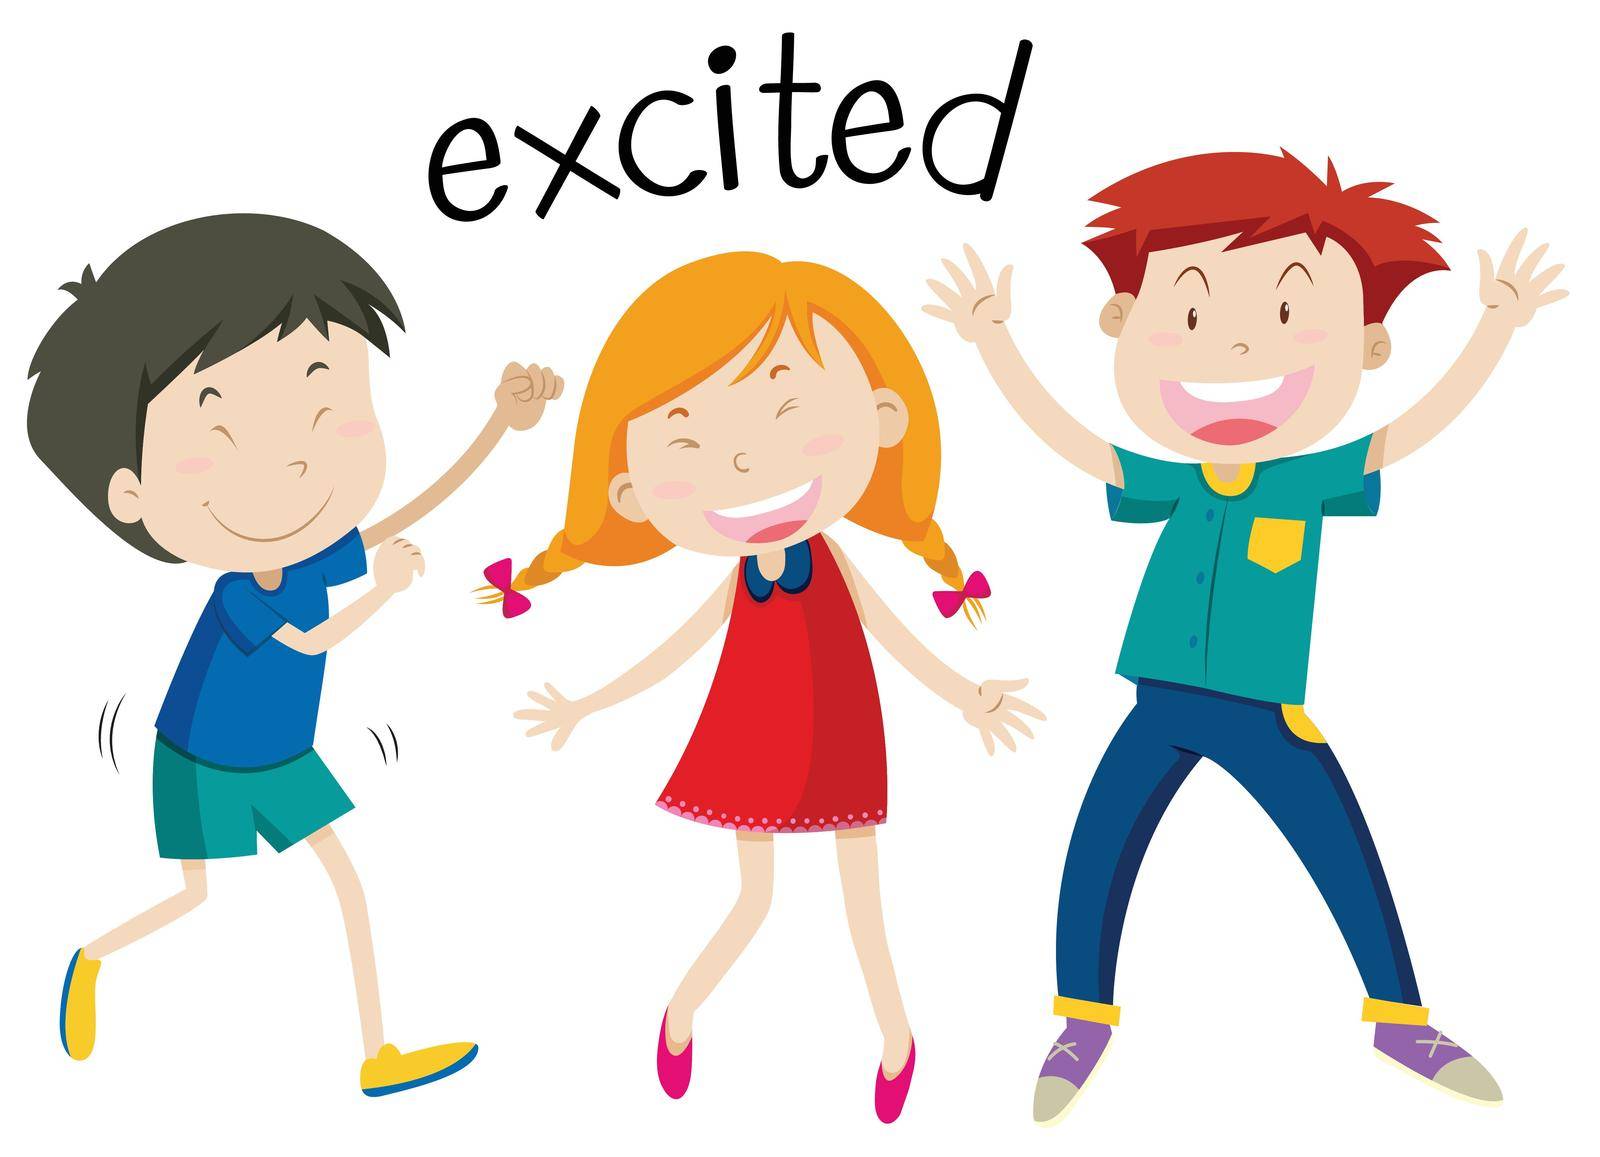 English vocabulary of excited illustration